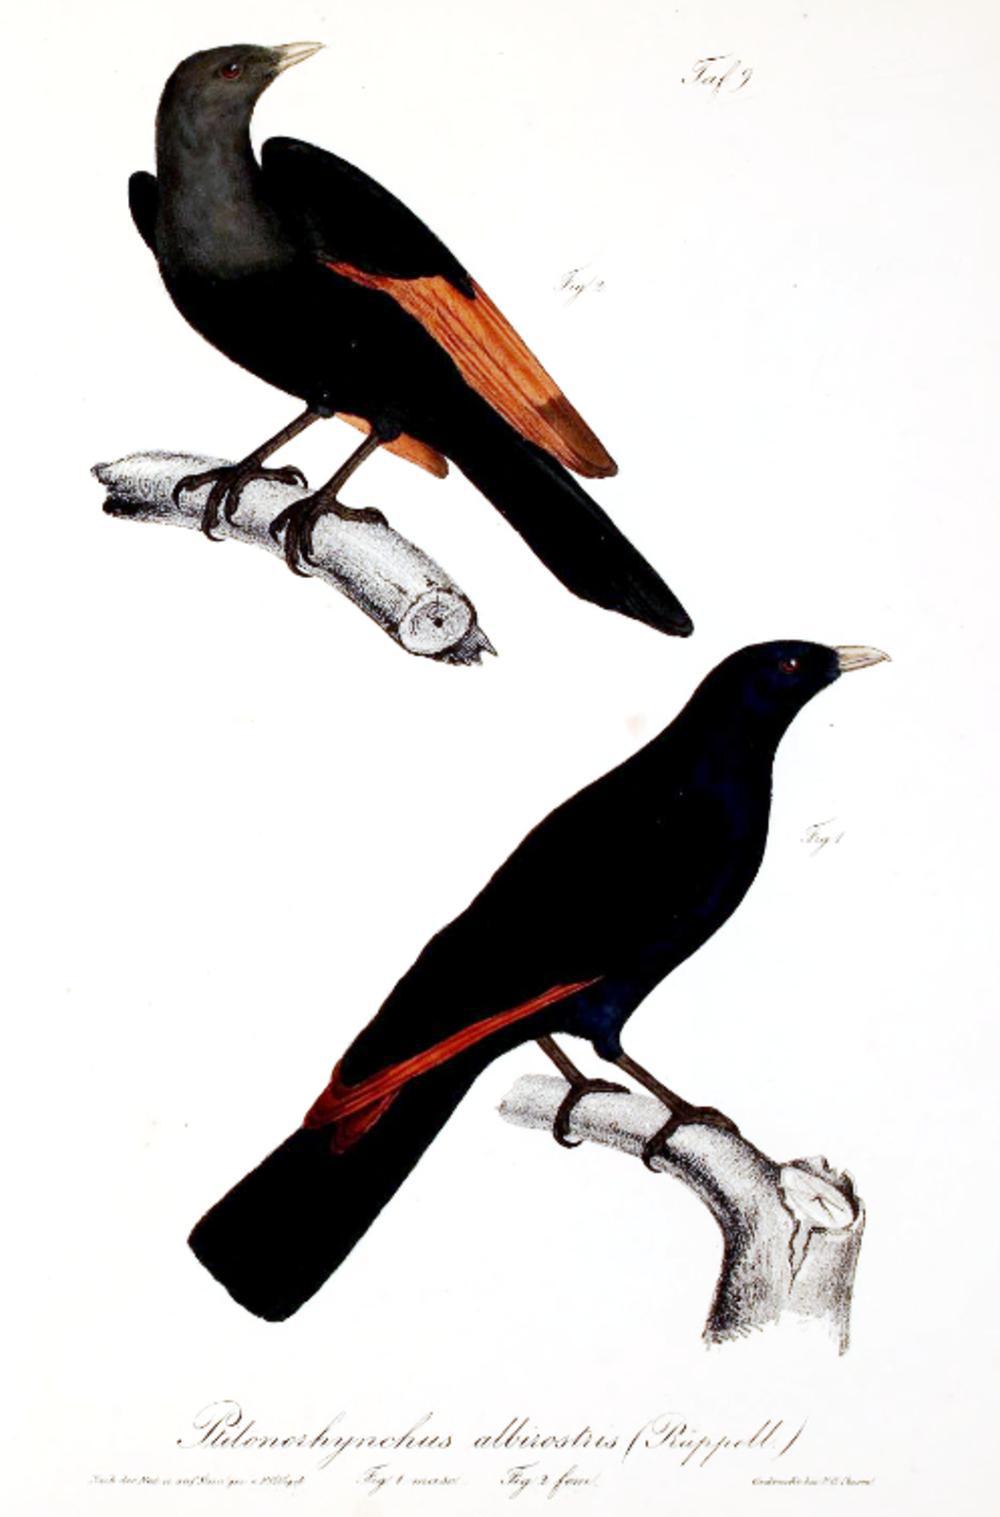 白嘴栗翅椋鸟 / White-billed Starling / Onychognathus albirostris